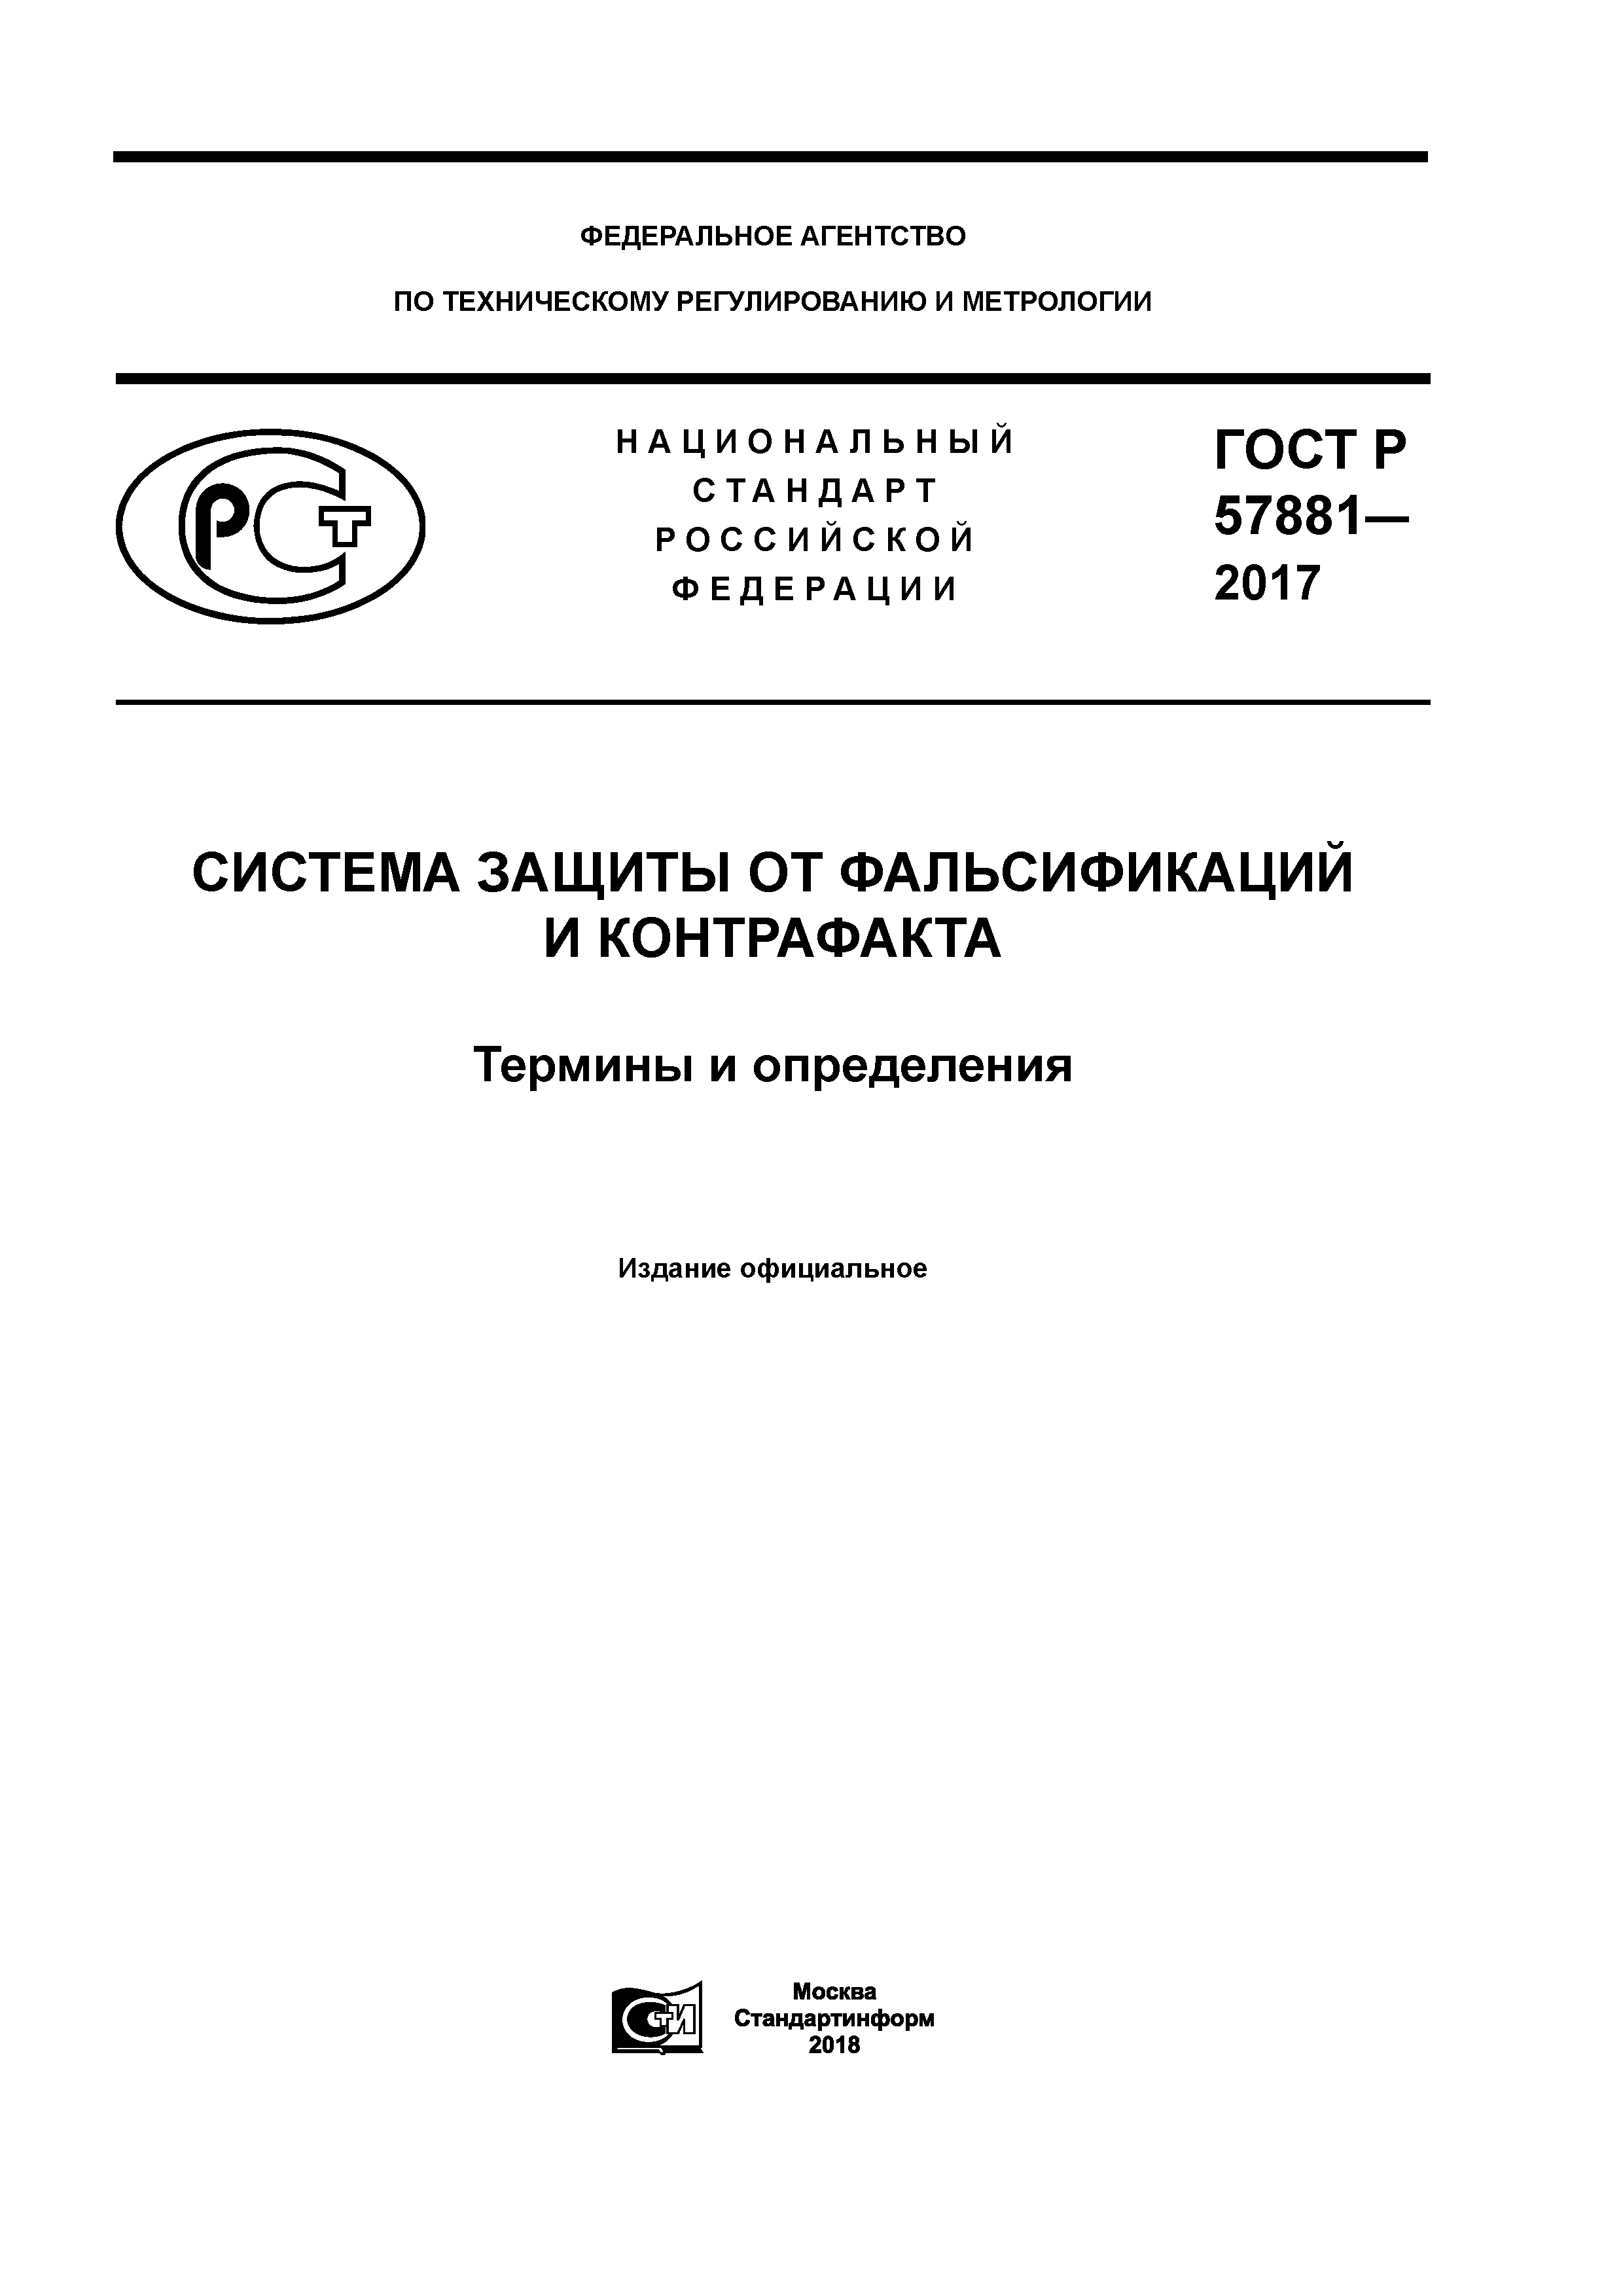 ГОСТ Р 57881-2017